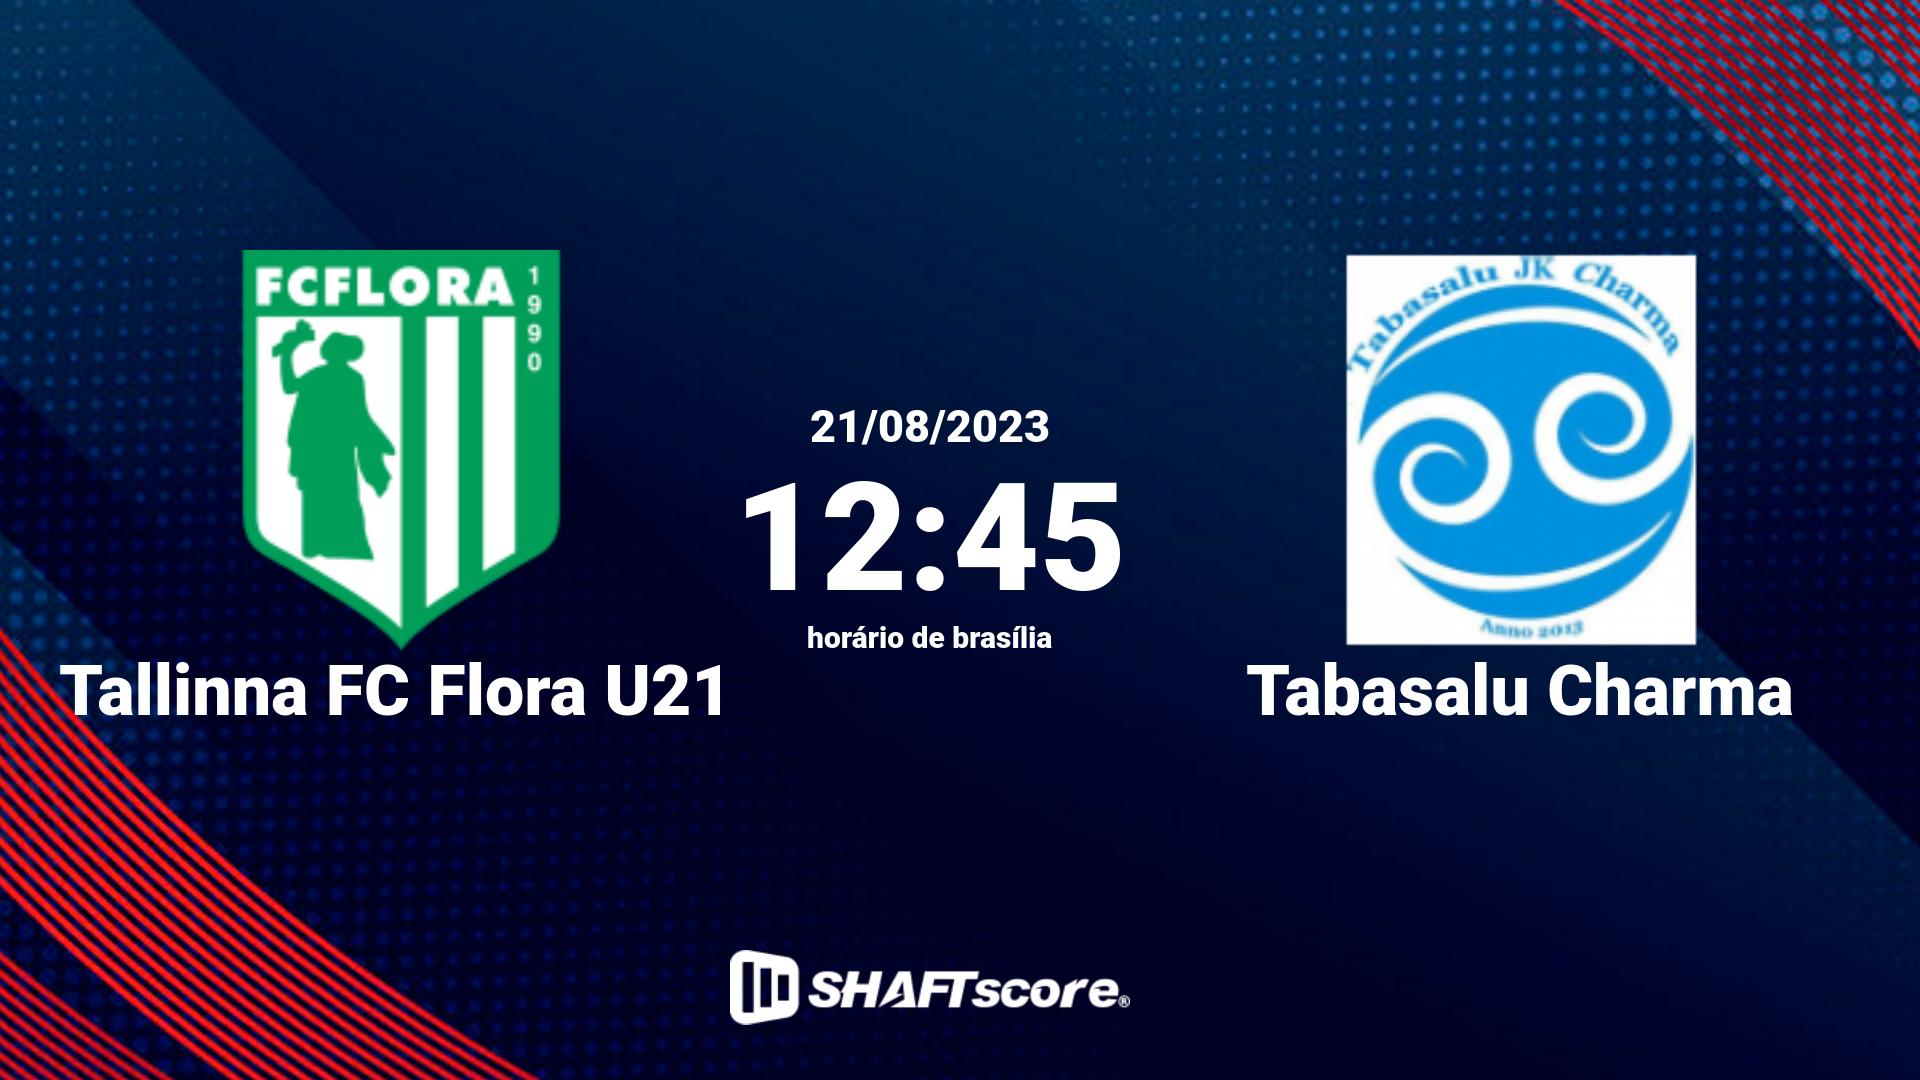 Estatísticas do jogo Tallinna FC Flora U21 vs Tabasalu Charma 21.08 12:45